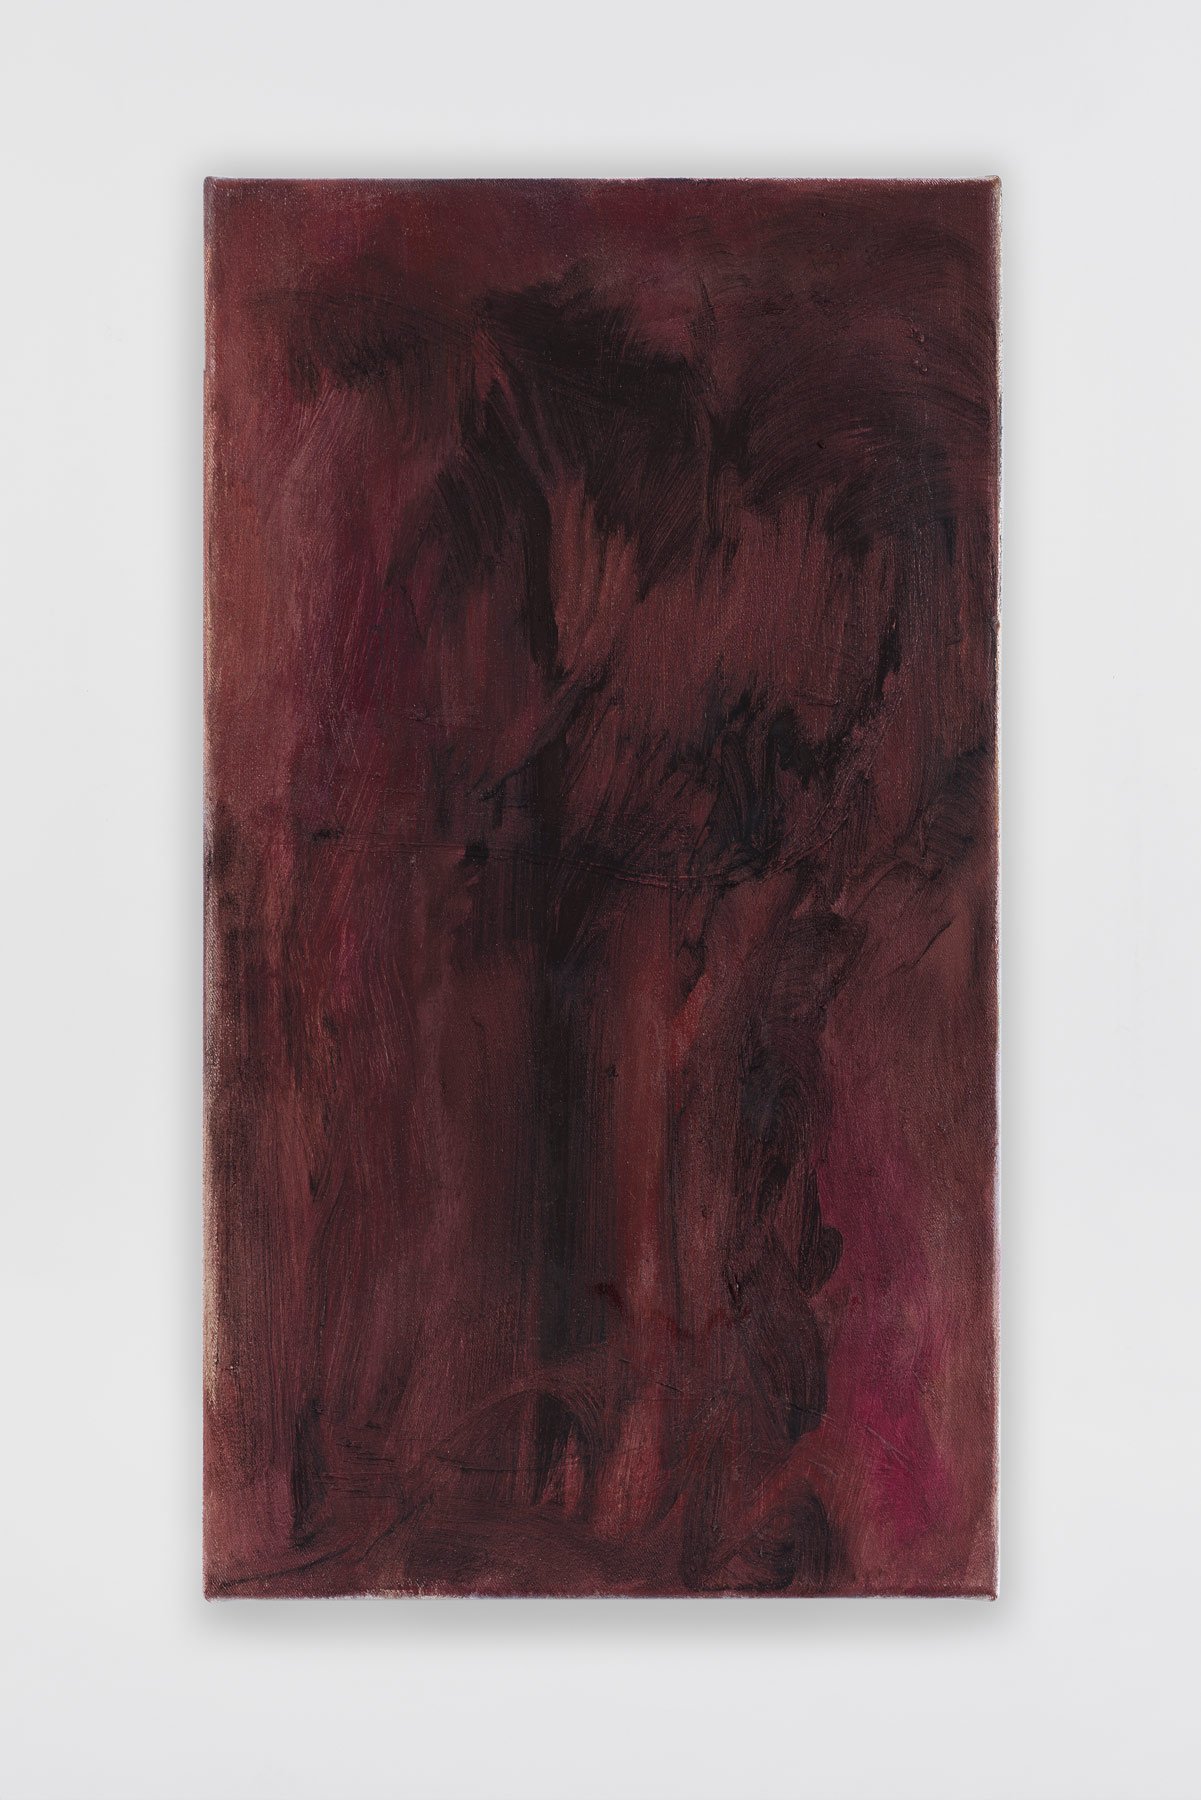 B02 - 1020, 2020 oil on canvas, 50 x 25 cm